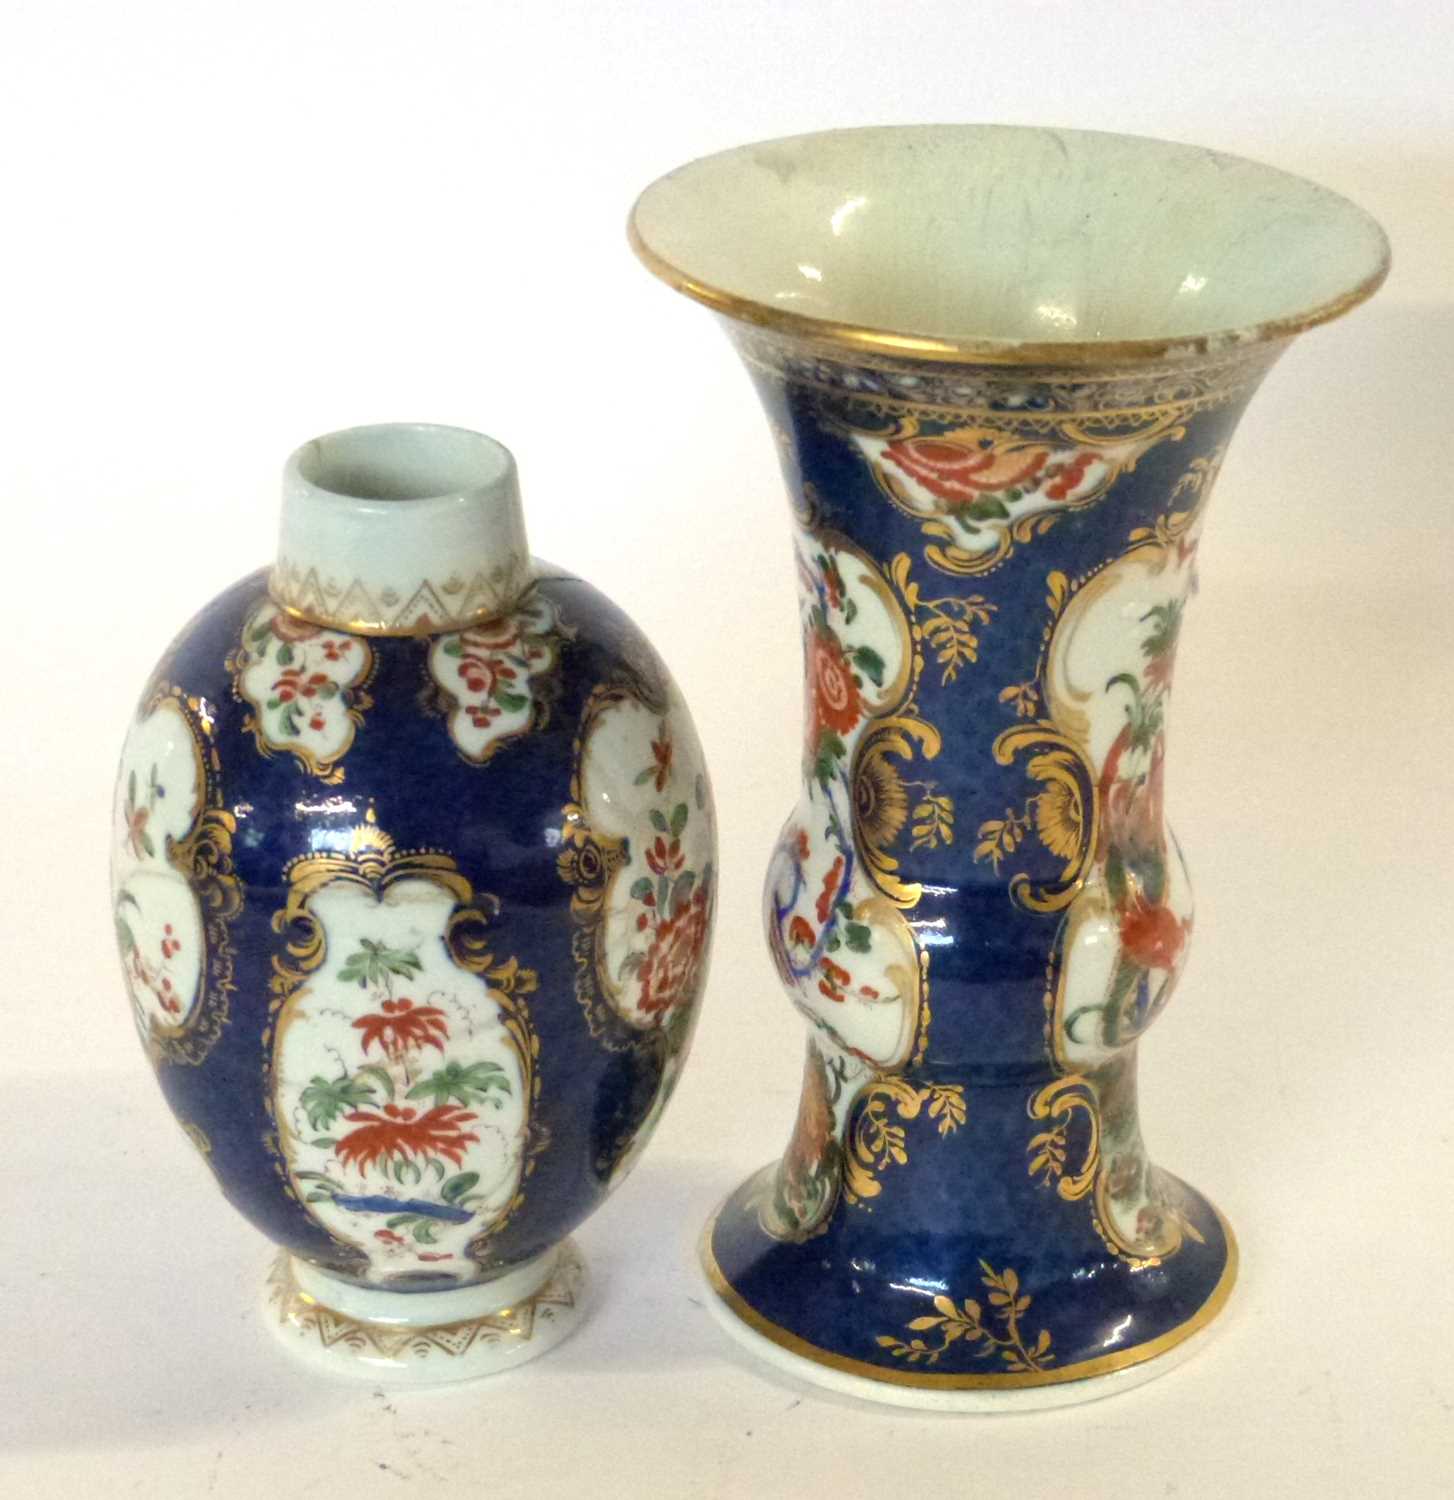 An 18th Century Worcester blue ground beaker vase with Kakiemon style decoration, 15cm high (